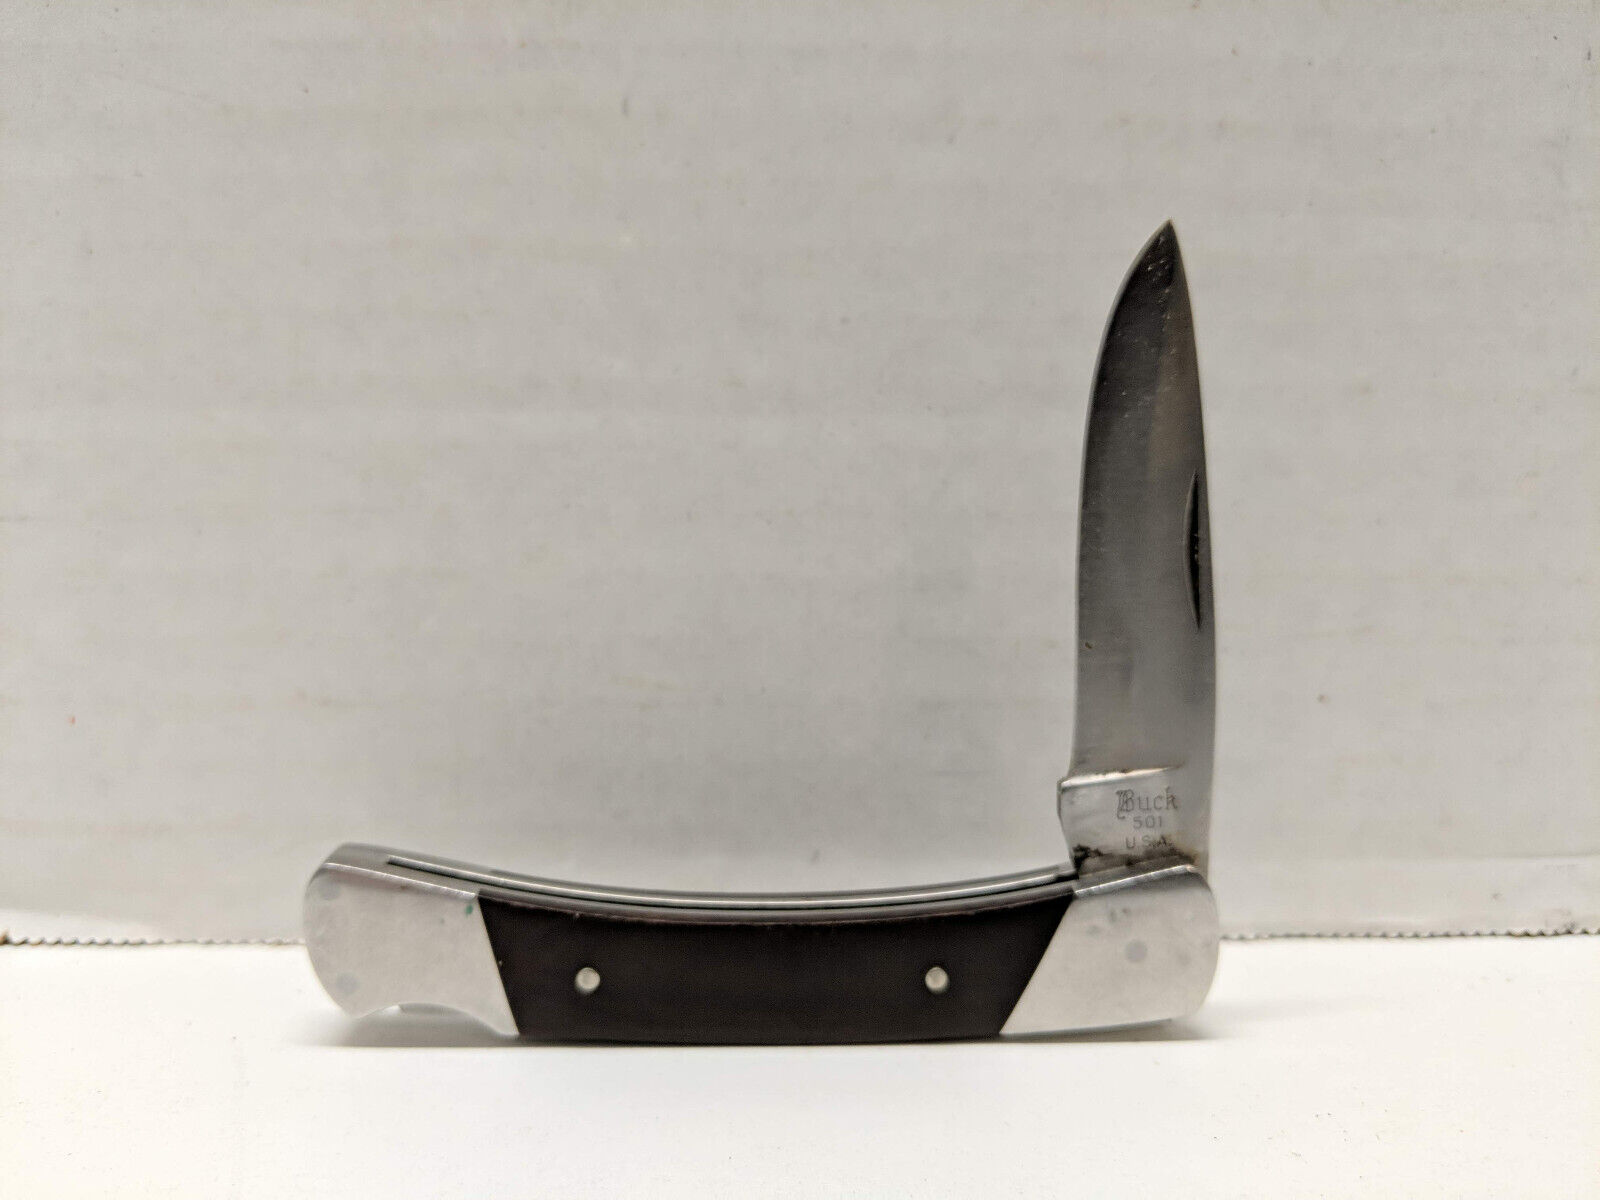 USA 501 Buck Pocket Knife Single Blade Lockback Clean Used Condition